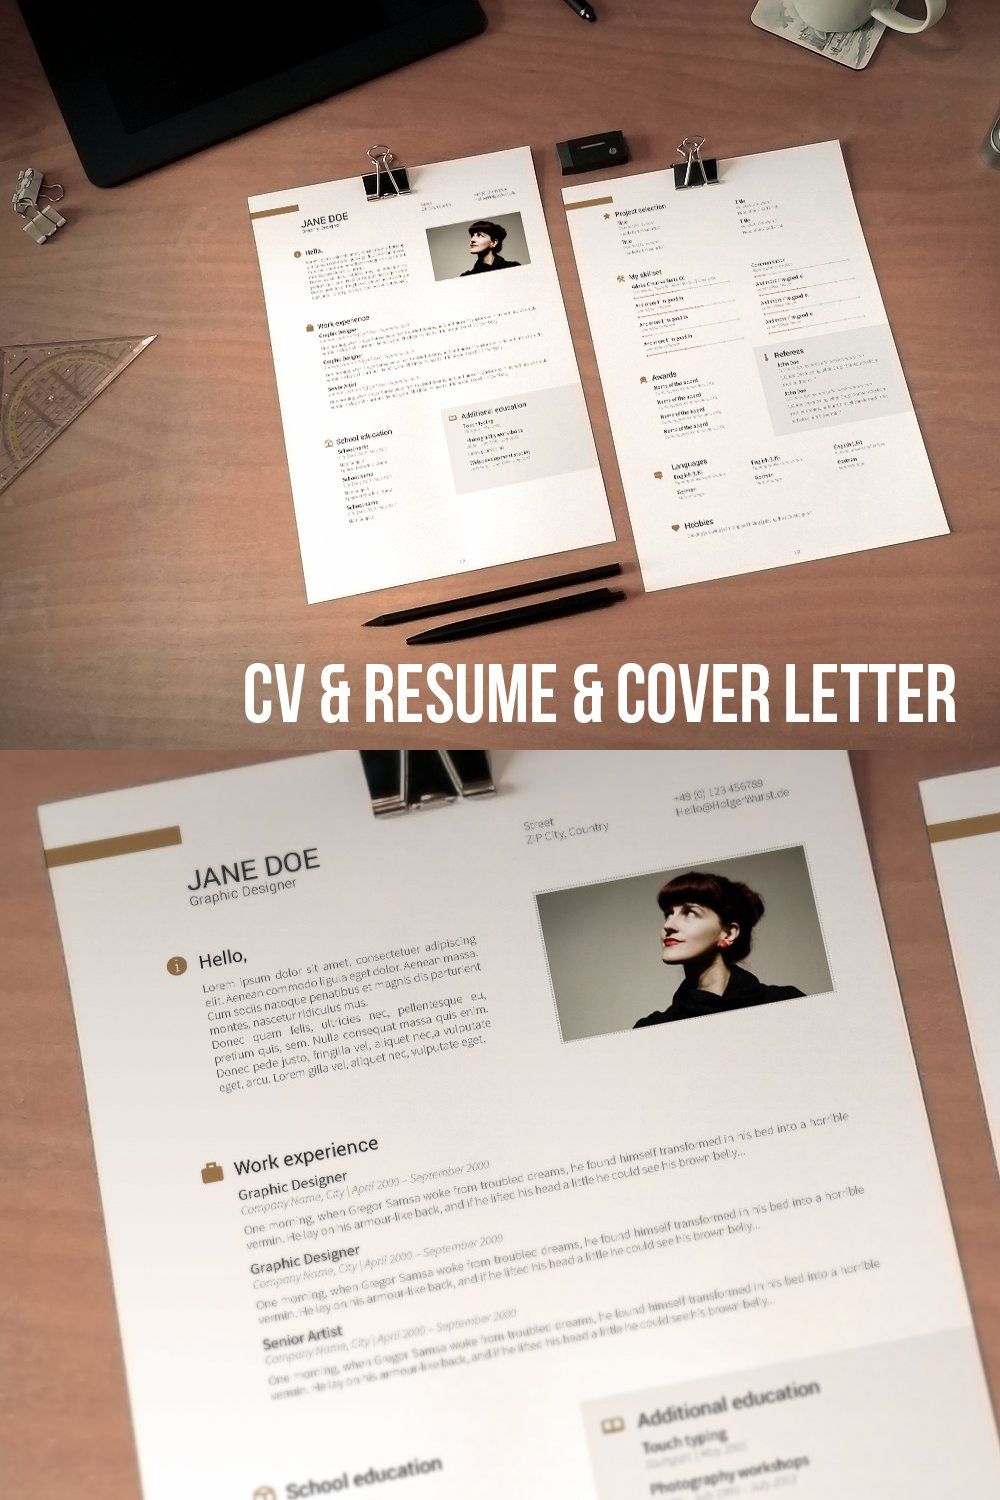 CV, resume and cover letter set v2 pinterest preview image.